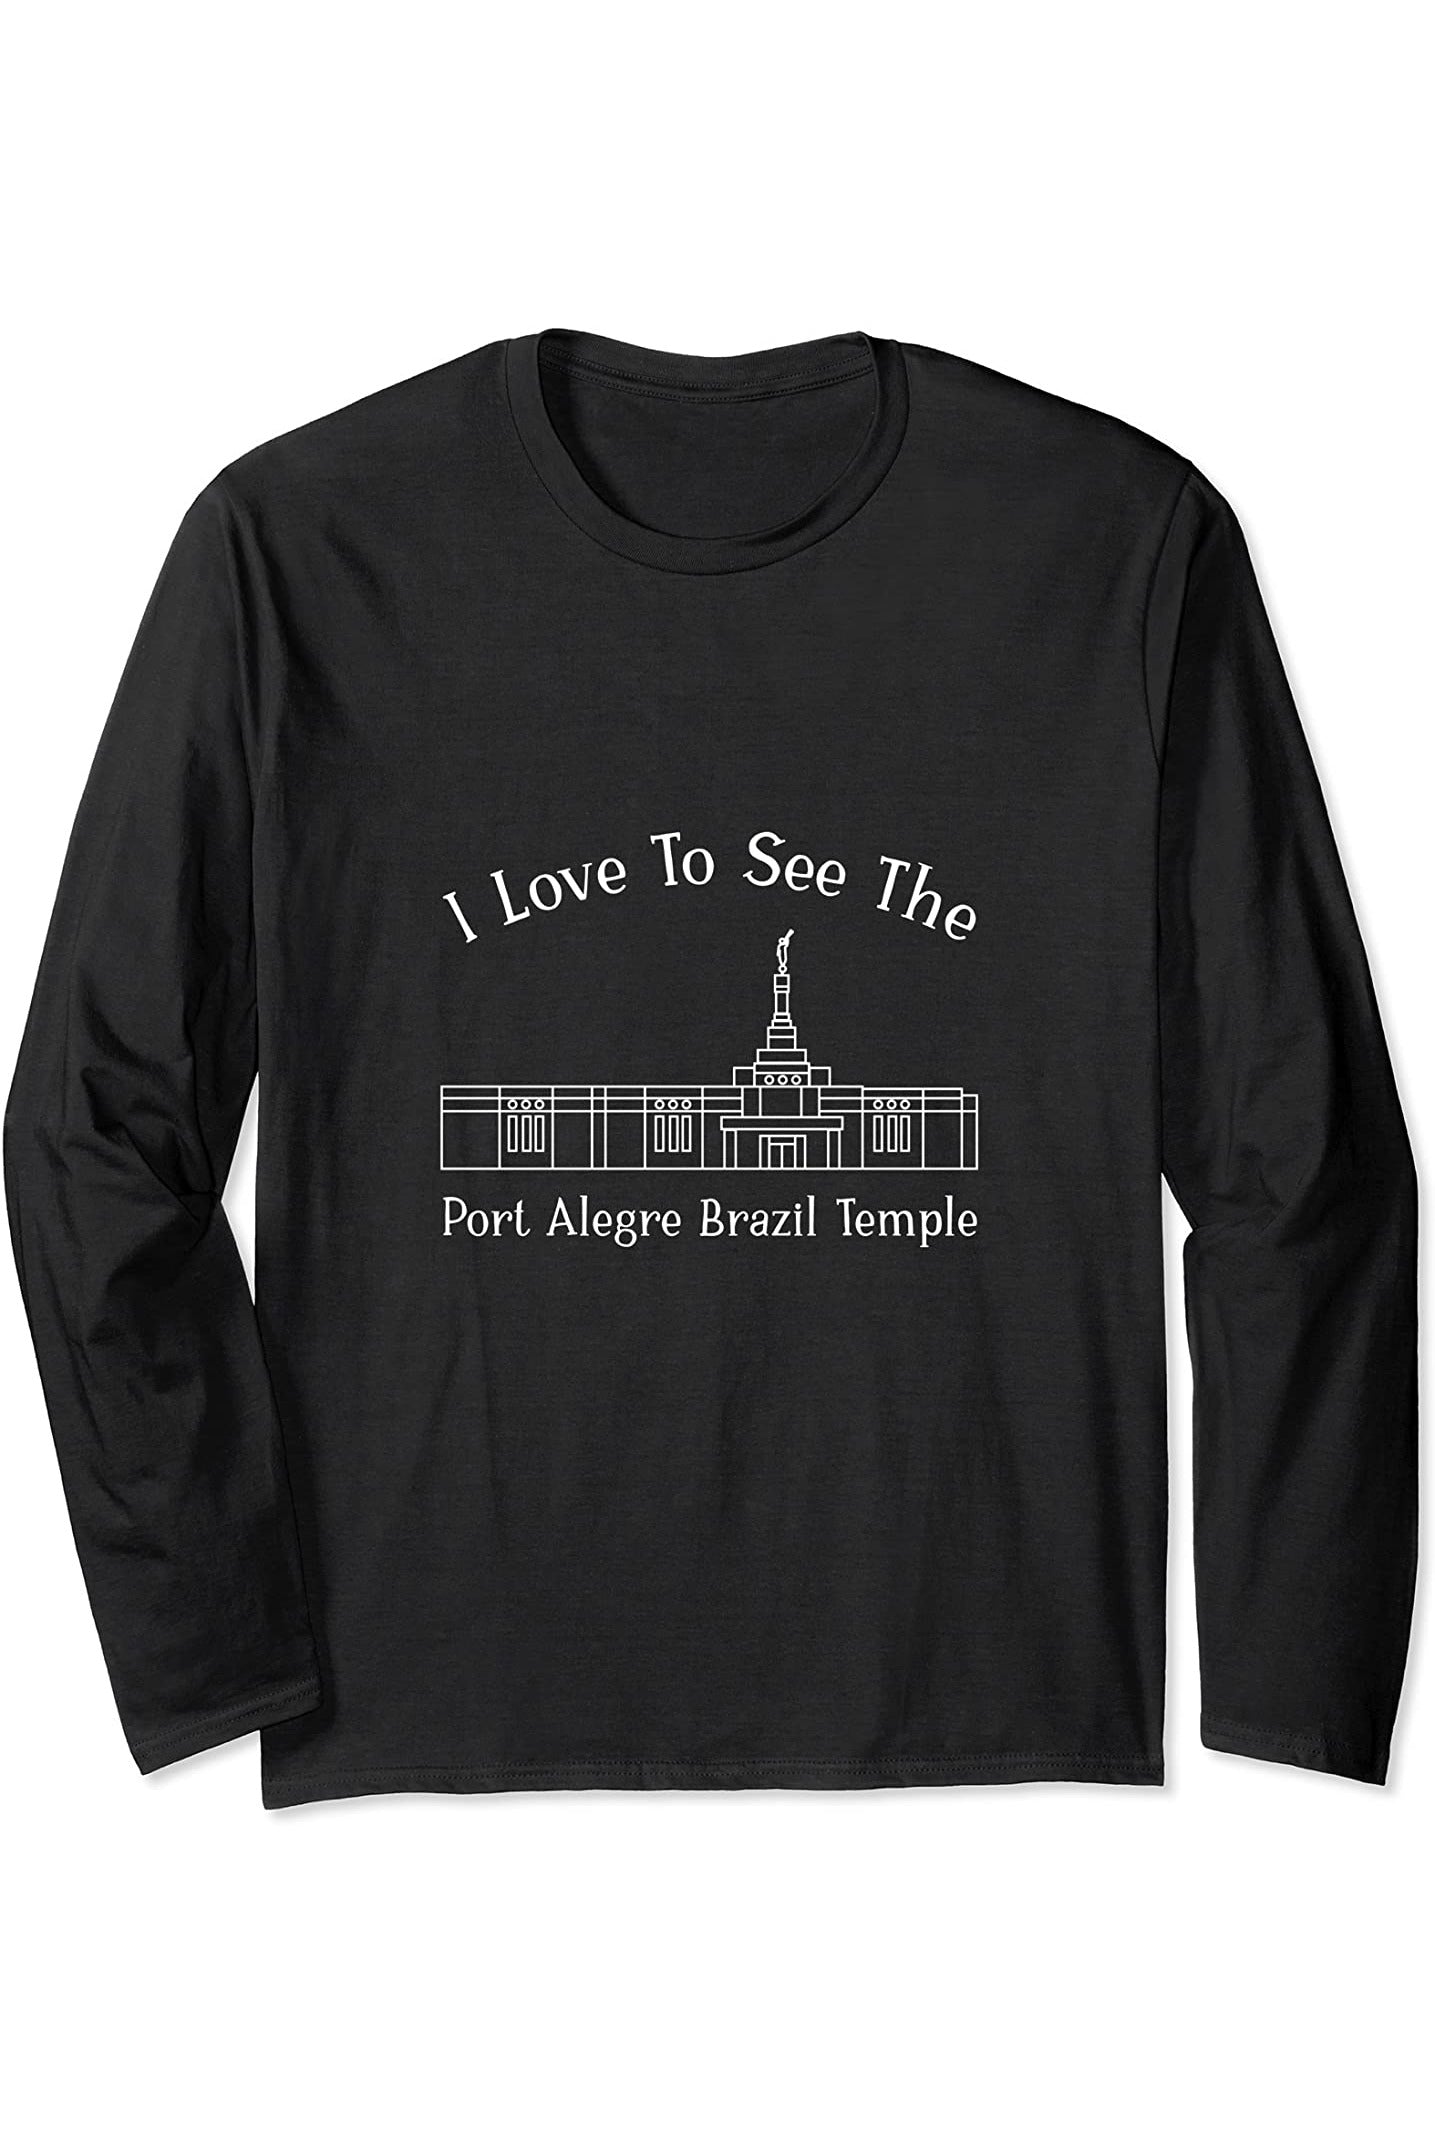 Porto Alegre Brazil Temple Long Sleeve T-Shirt - Happy Style (English) US